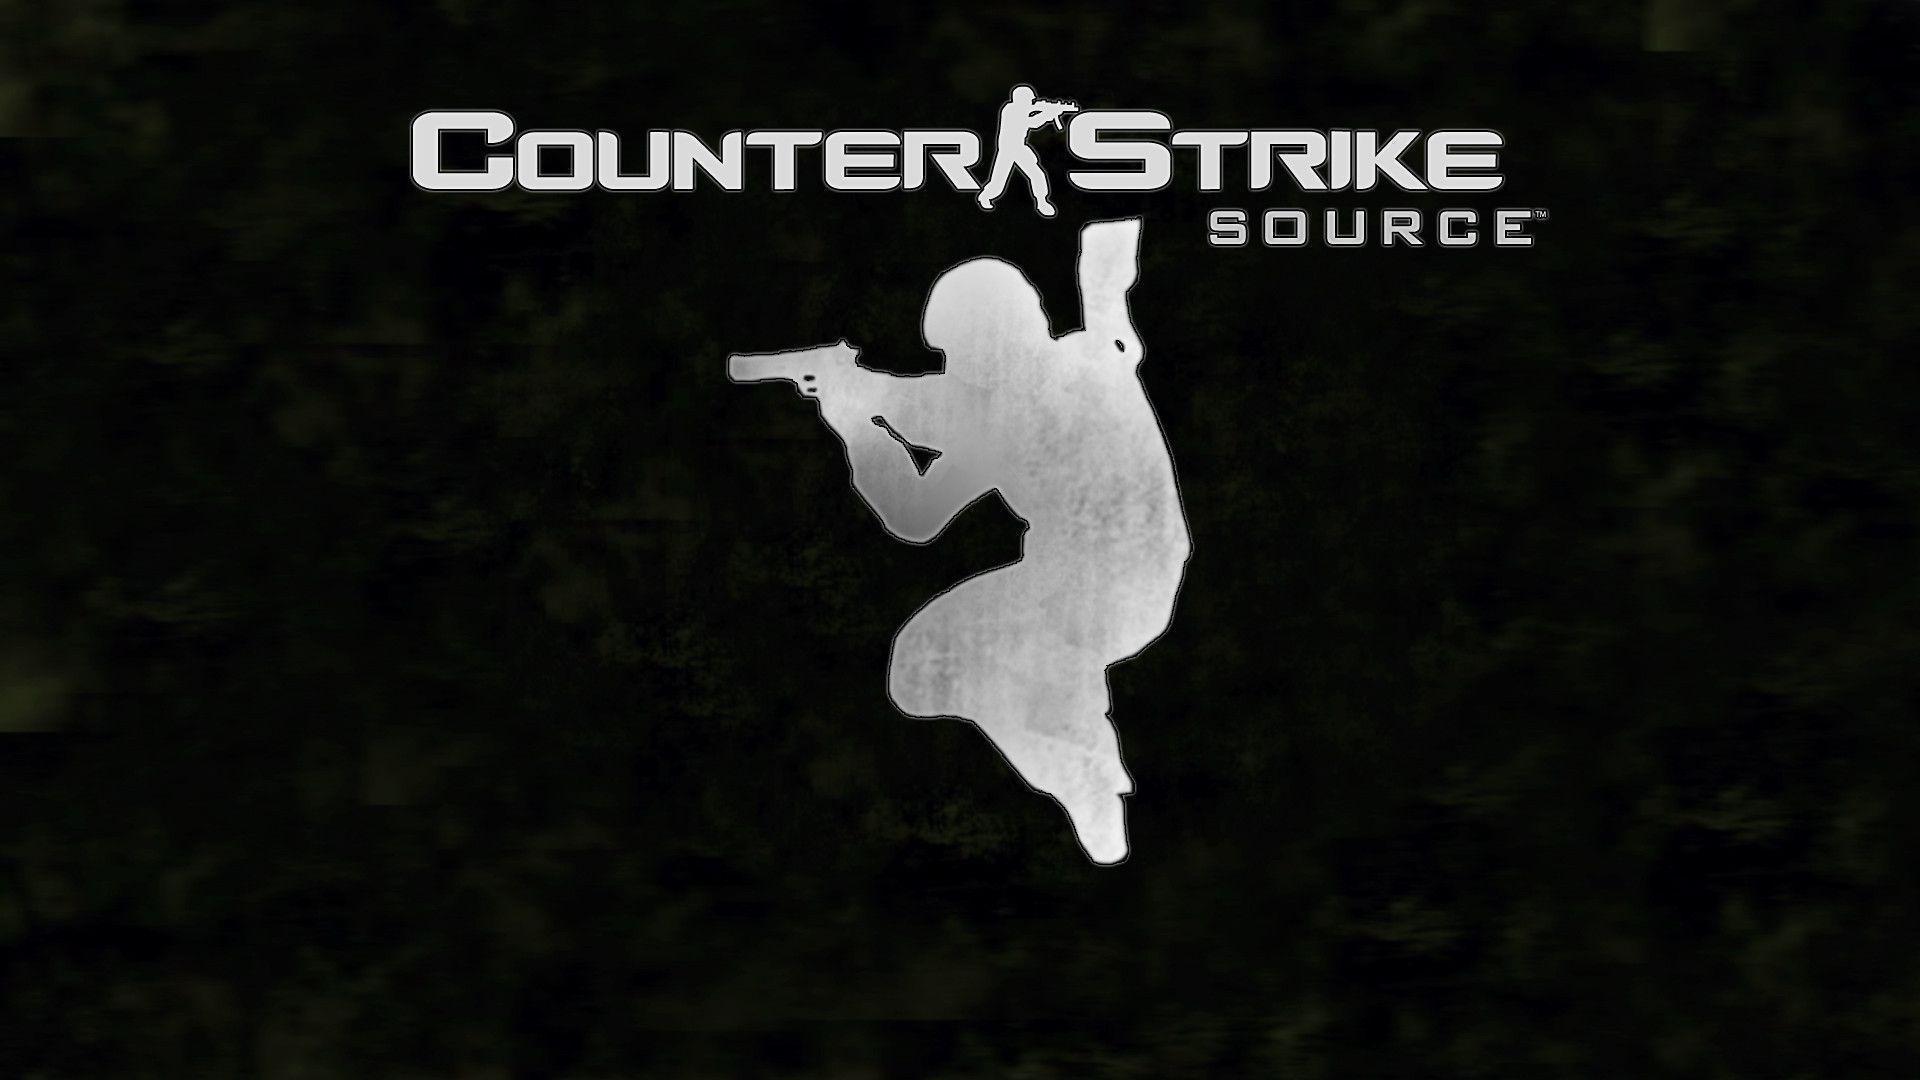 HD Logo Counter Strike WallpaperHD Logo Counter Strike Wallpaper